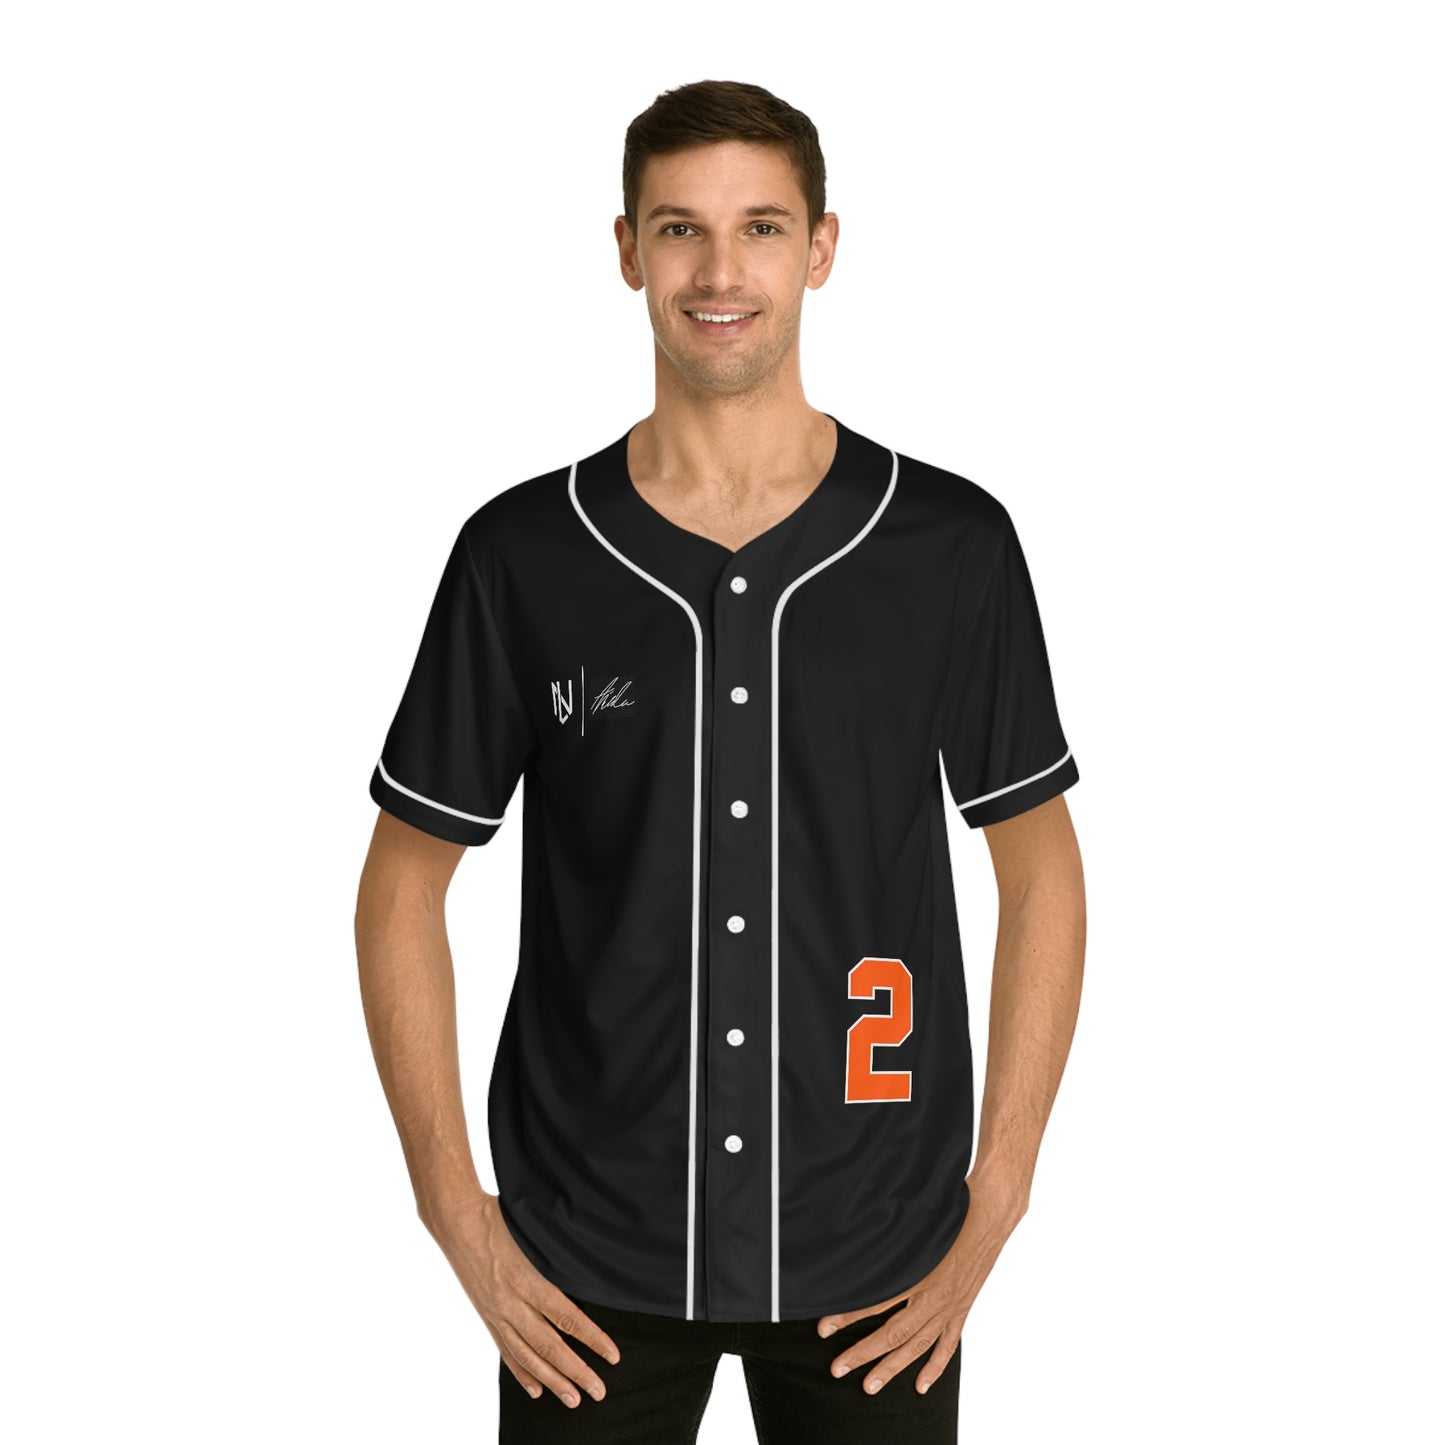 Aidan Meola Baseball Jersey (Black)